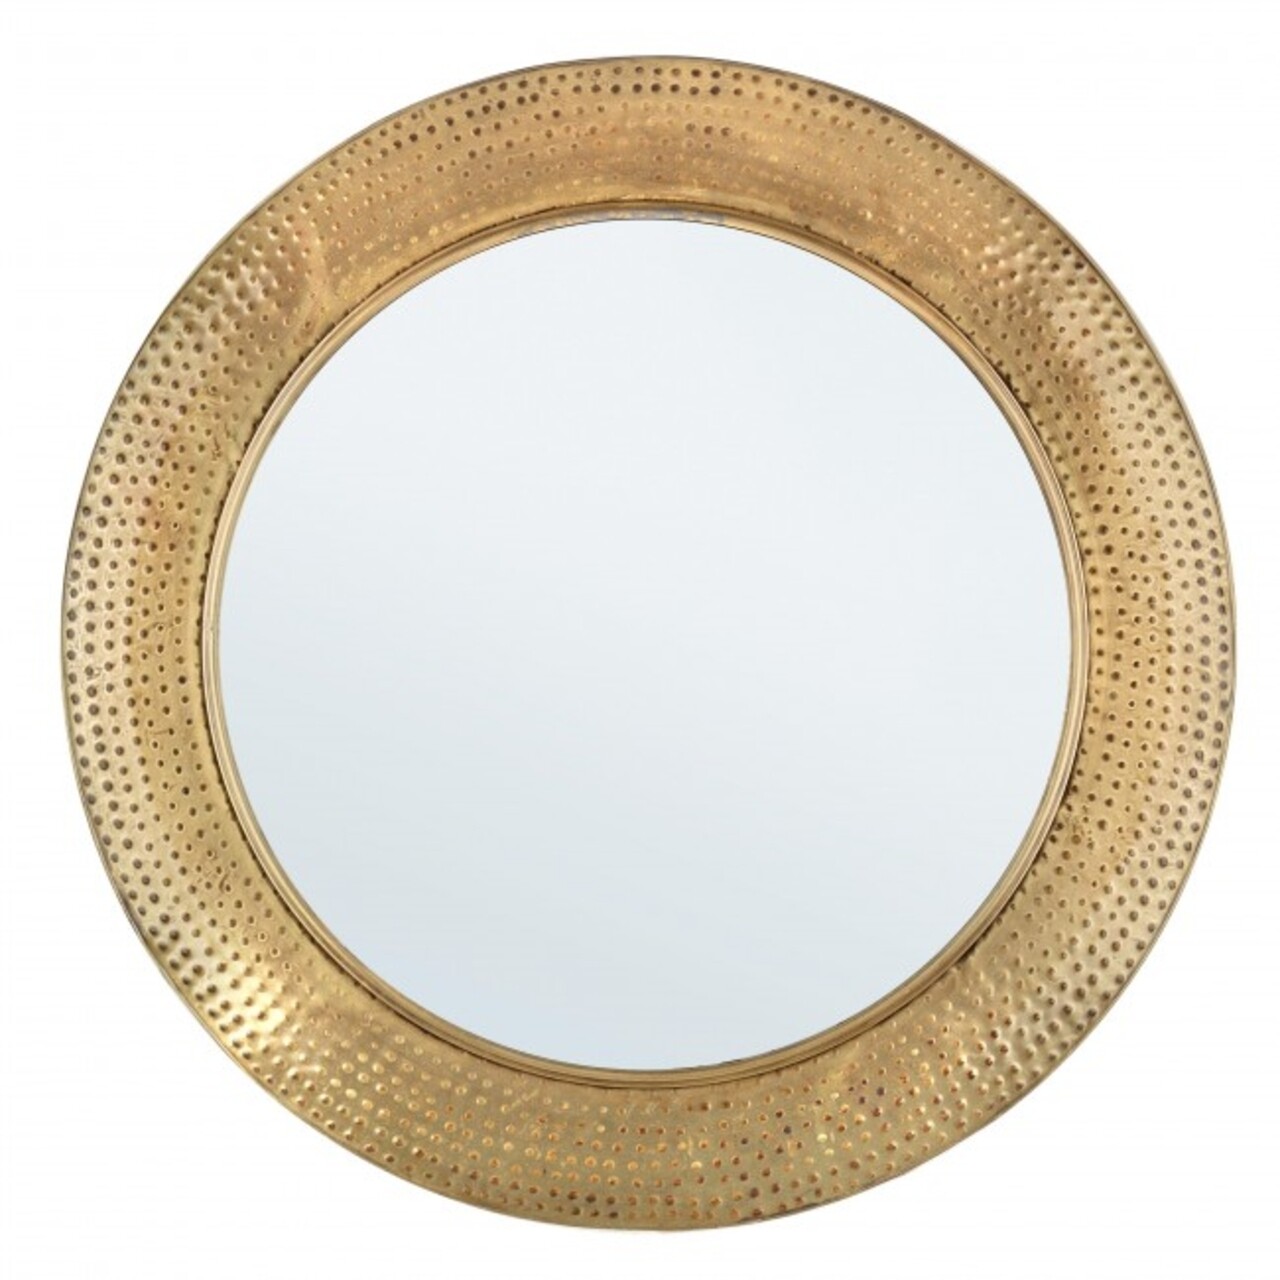 Adara Gold Dísz tükör, Bizzotto, 80 cm, acél